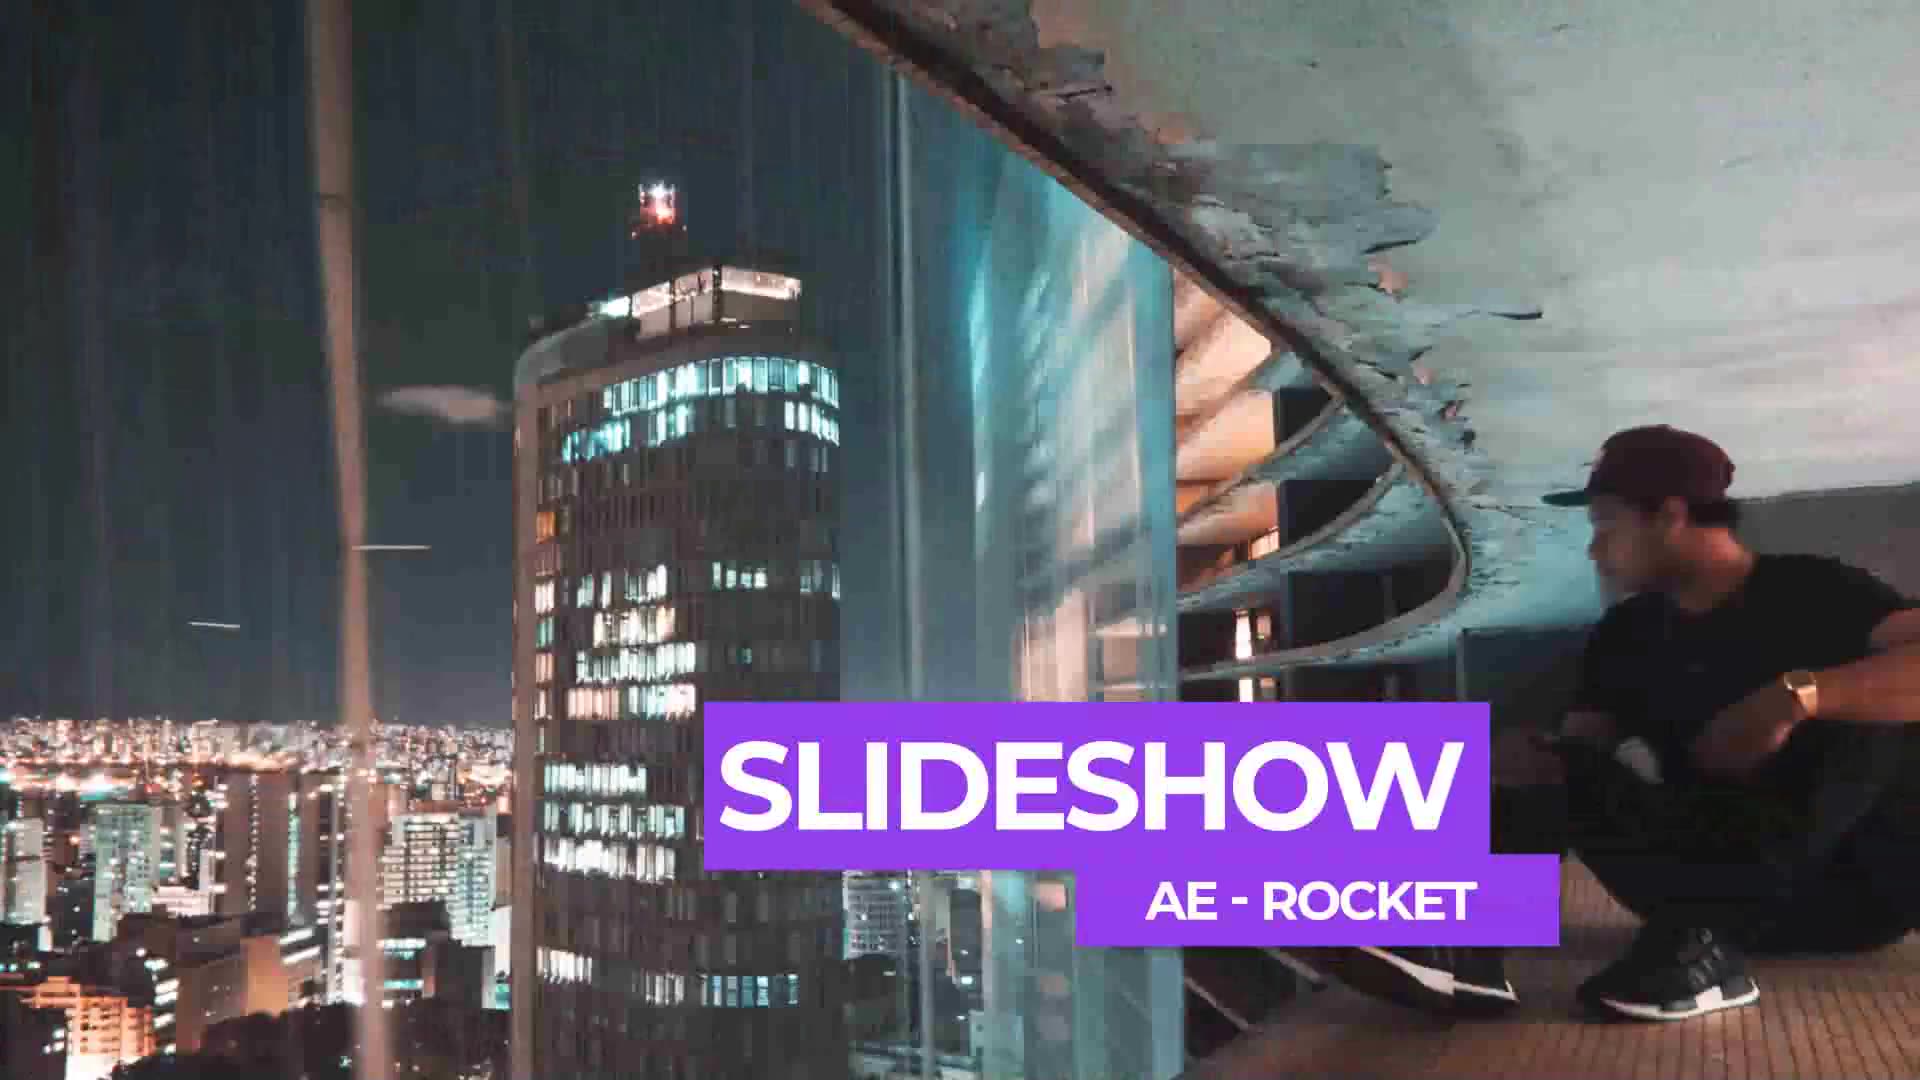 Modern Slideshow - Download Videohive 21316814